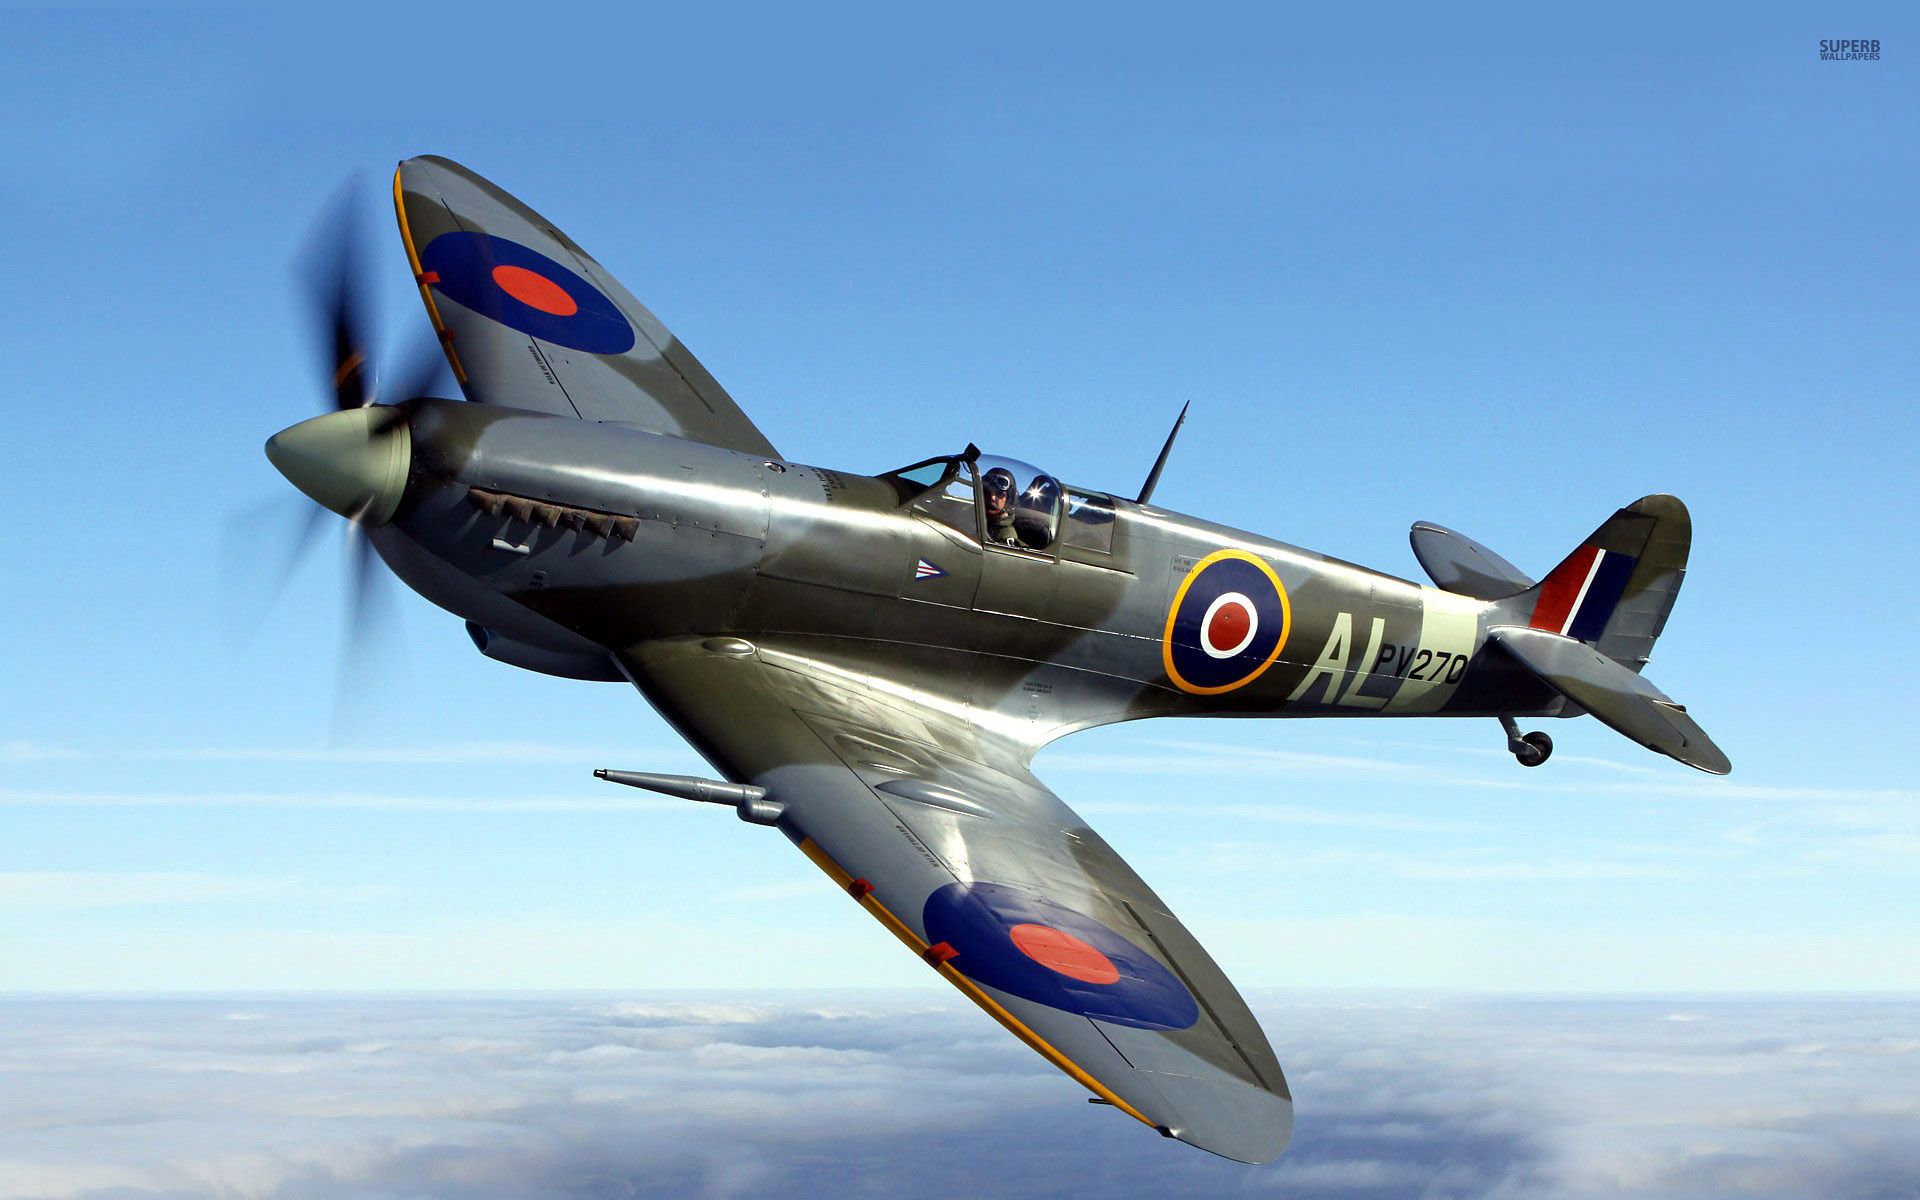 Supermarine Spitfire wallpaper - Aircraft wallpapers - #28318